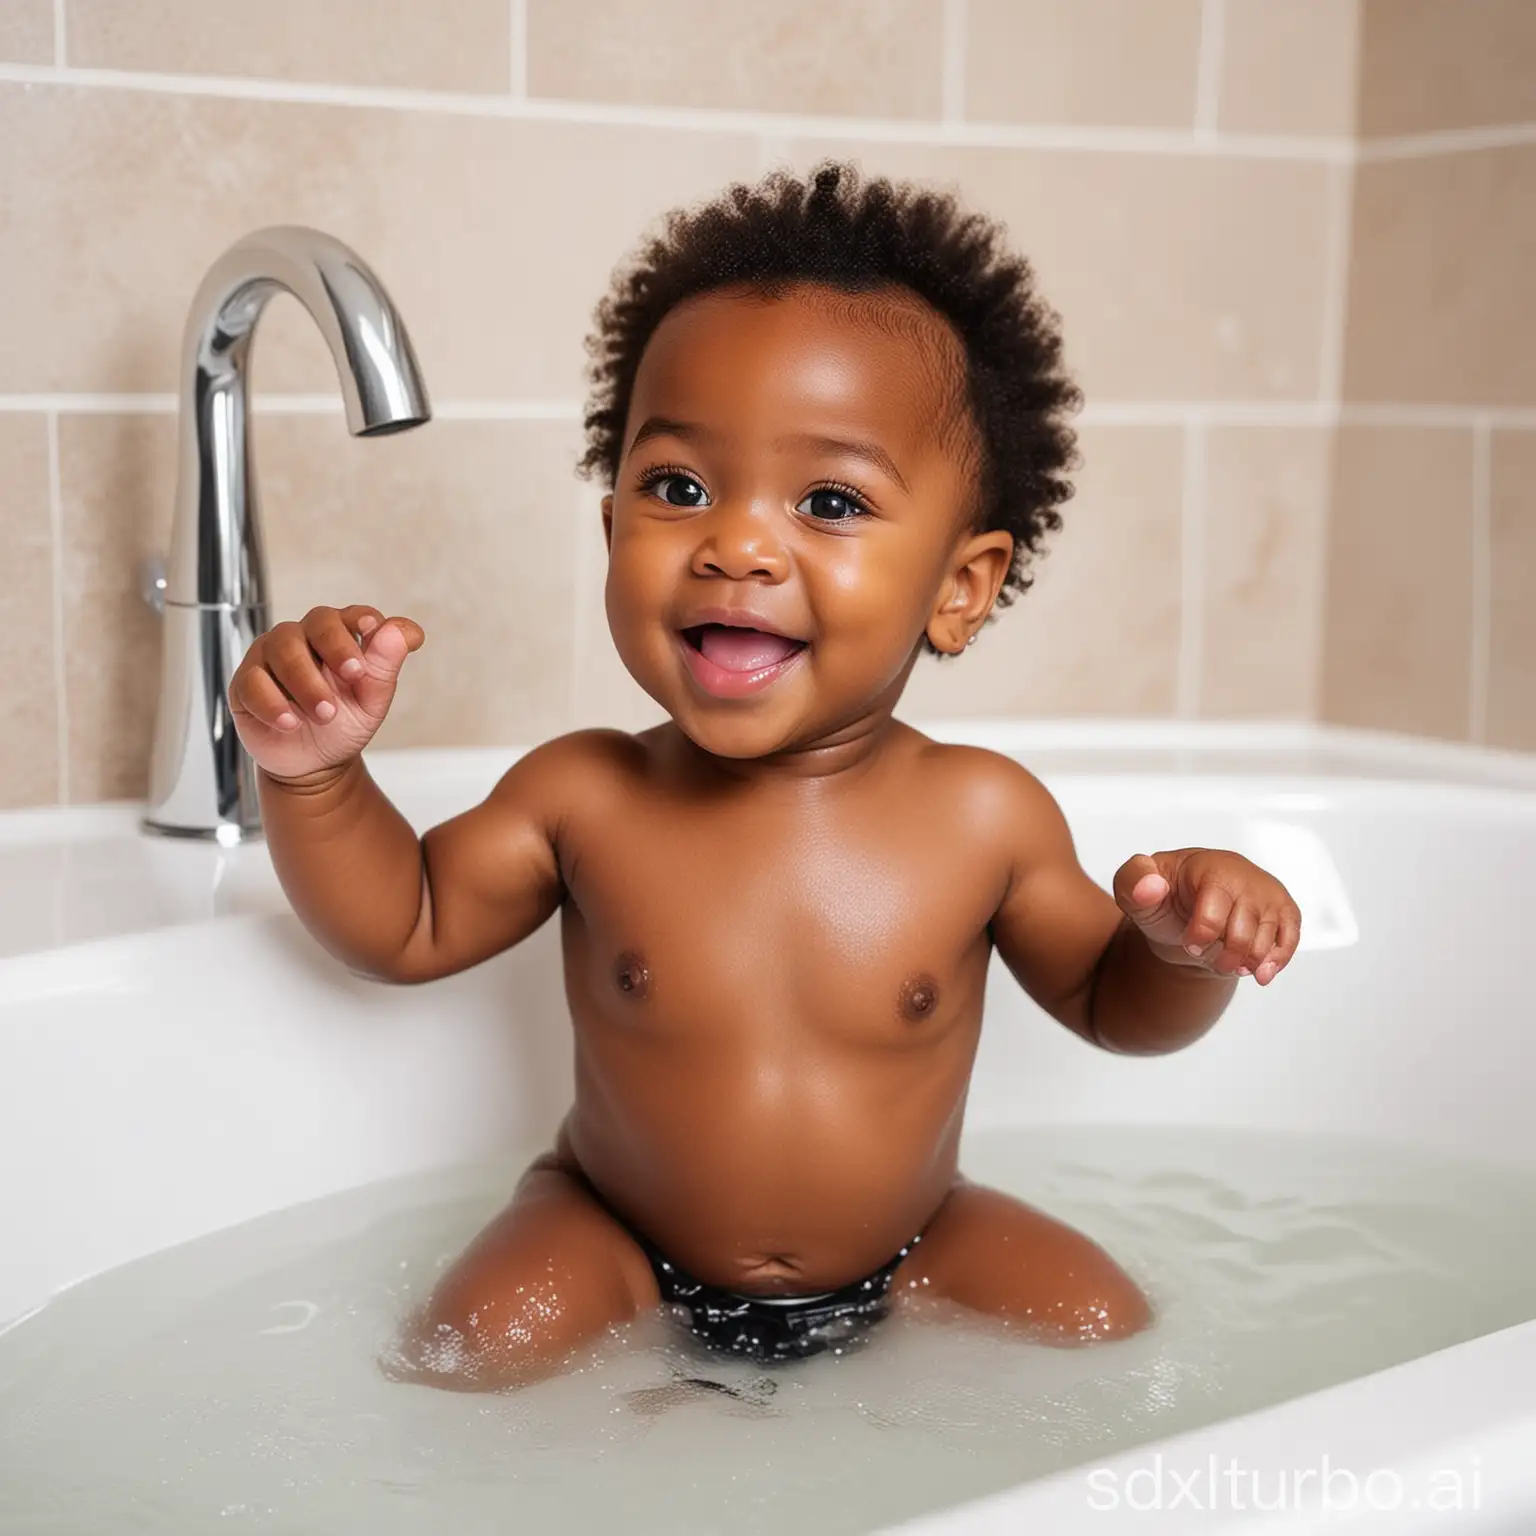 Cute black baby playing in the bathtub